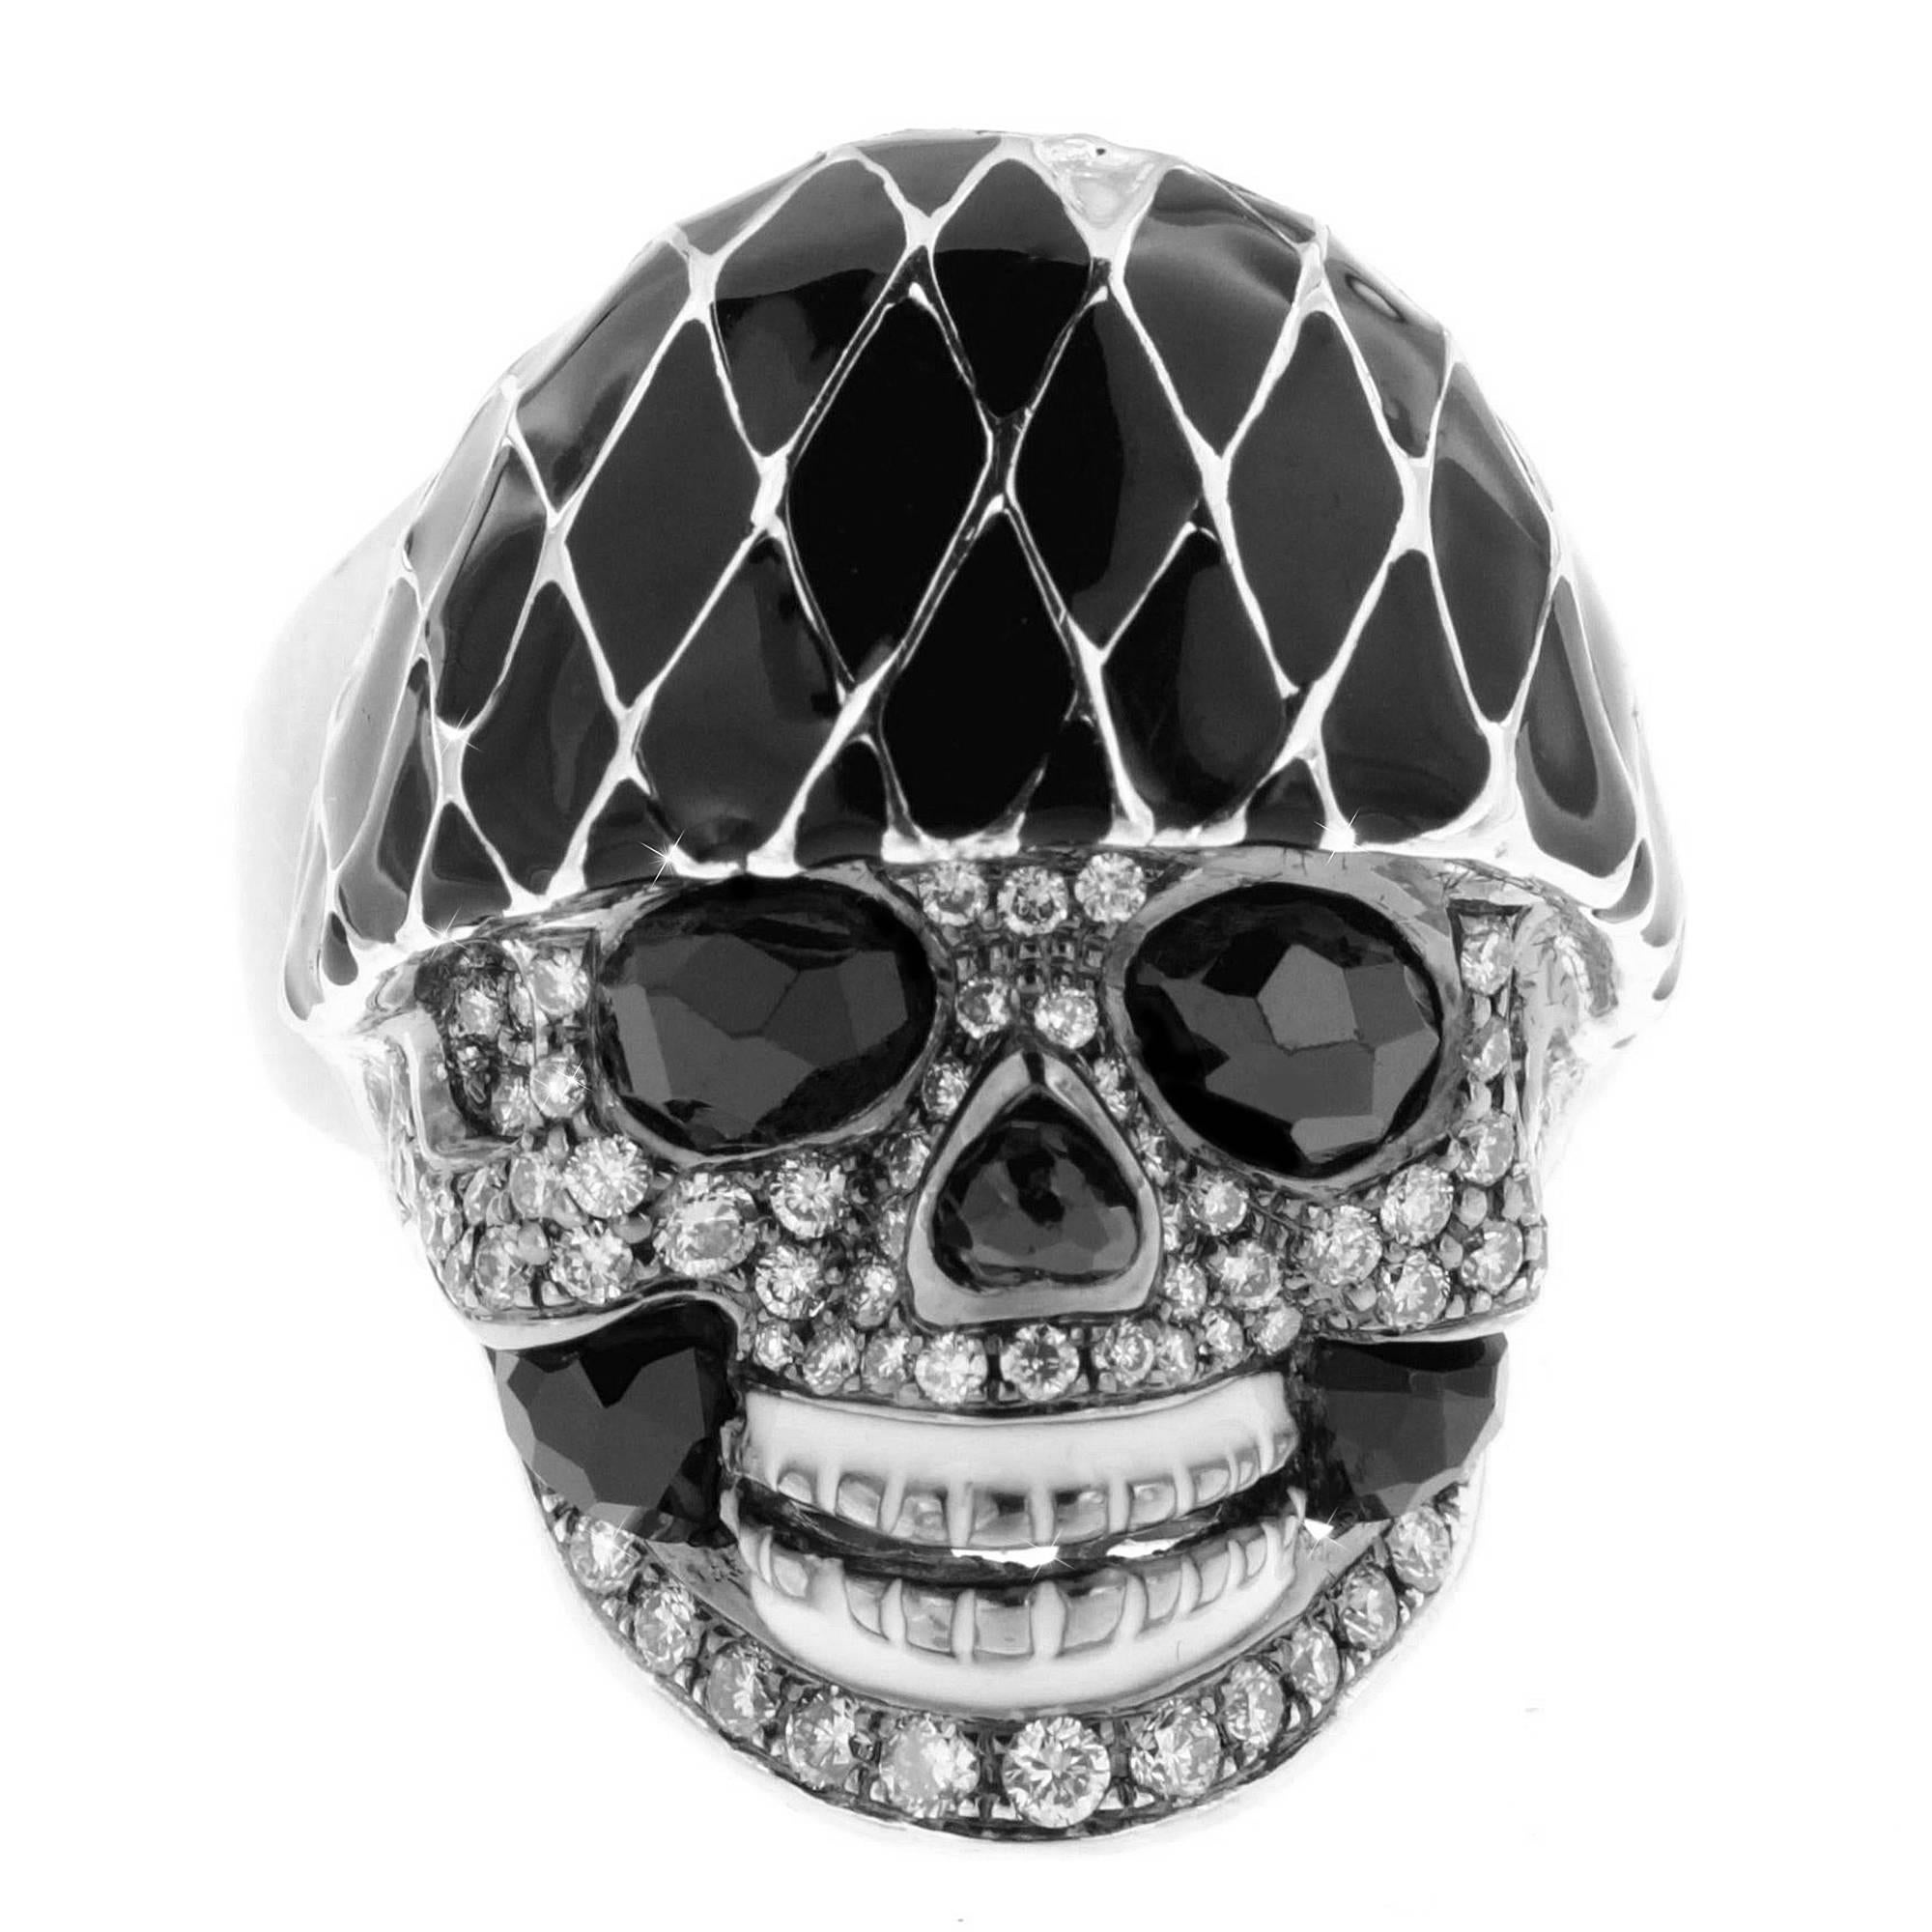 Harlequin Skull Ring, a Zorab Creation